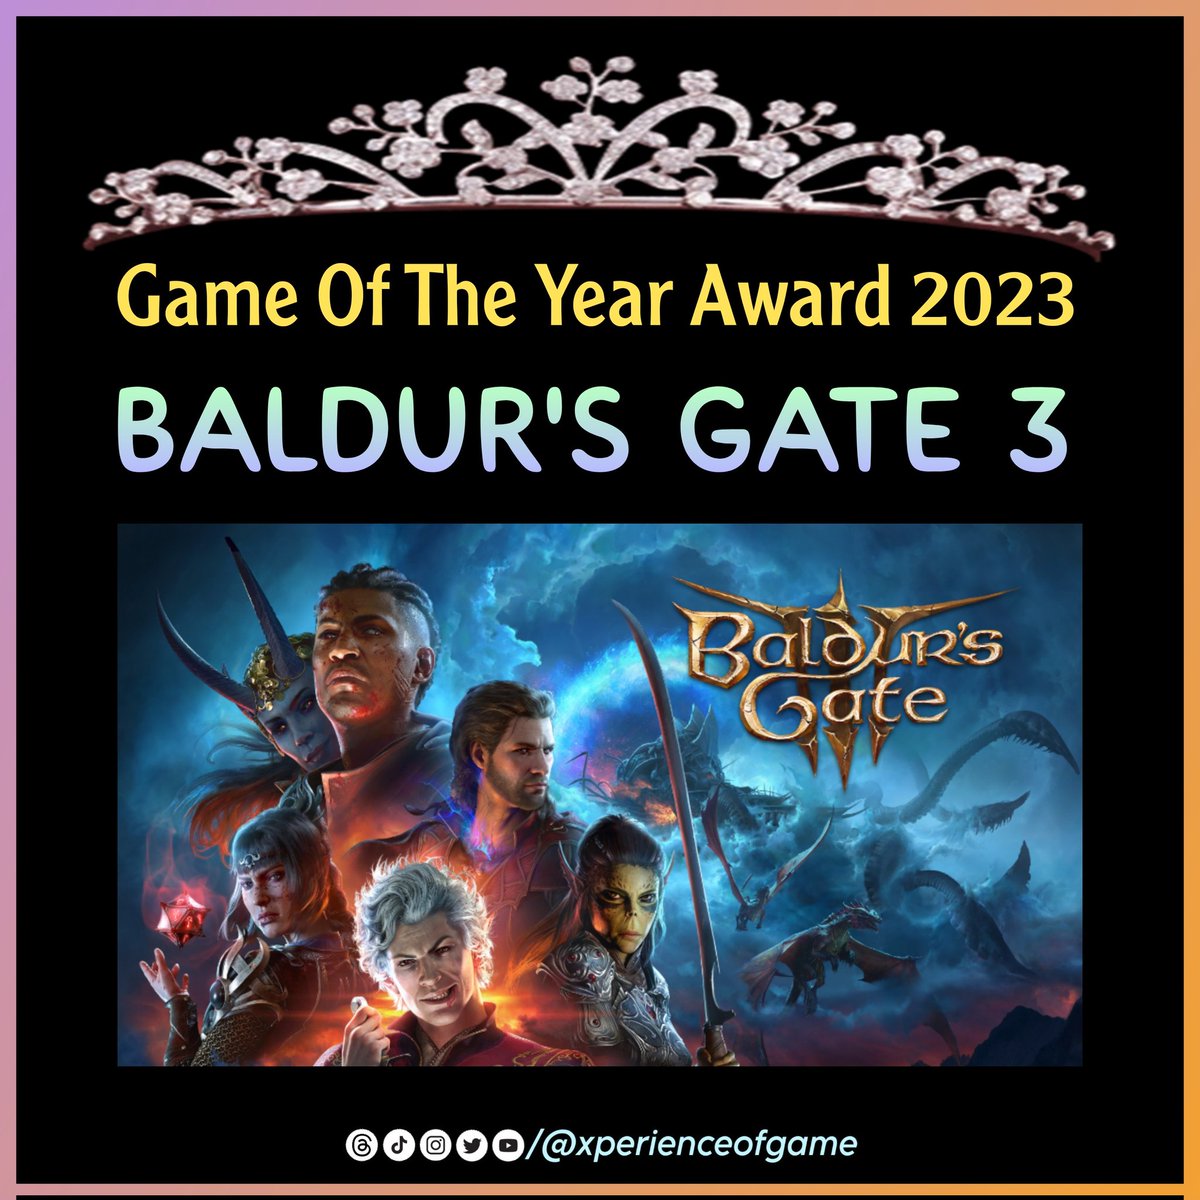 Game Of The Year Award 2023 Winner🏆
#gameoftheyear2023 
#baldursgate3
#xperienceofgame